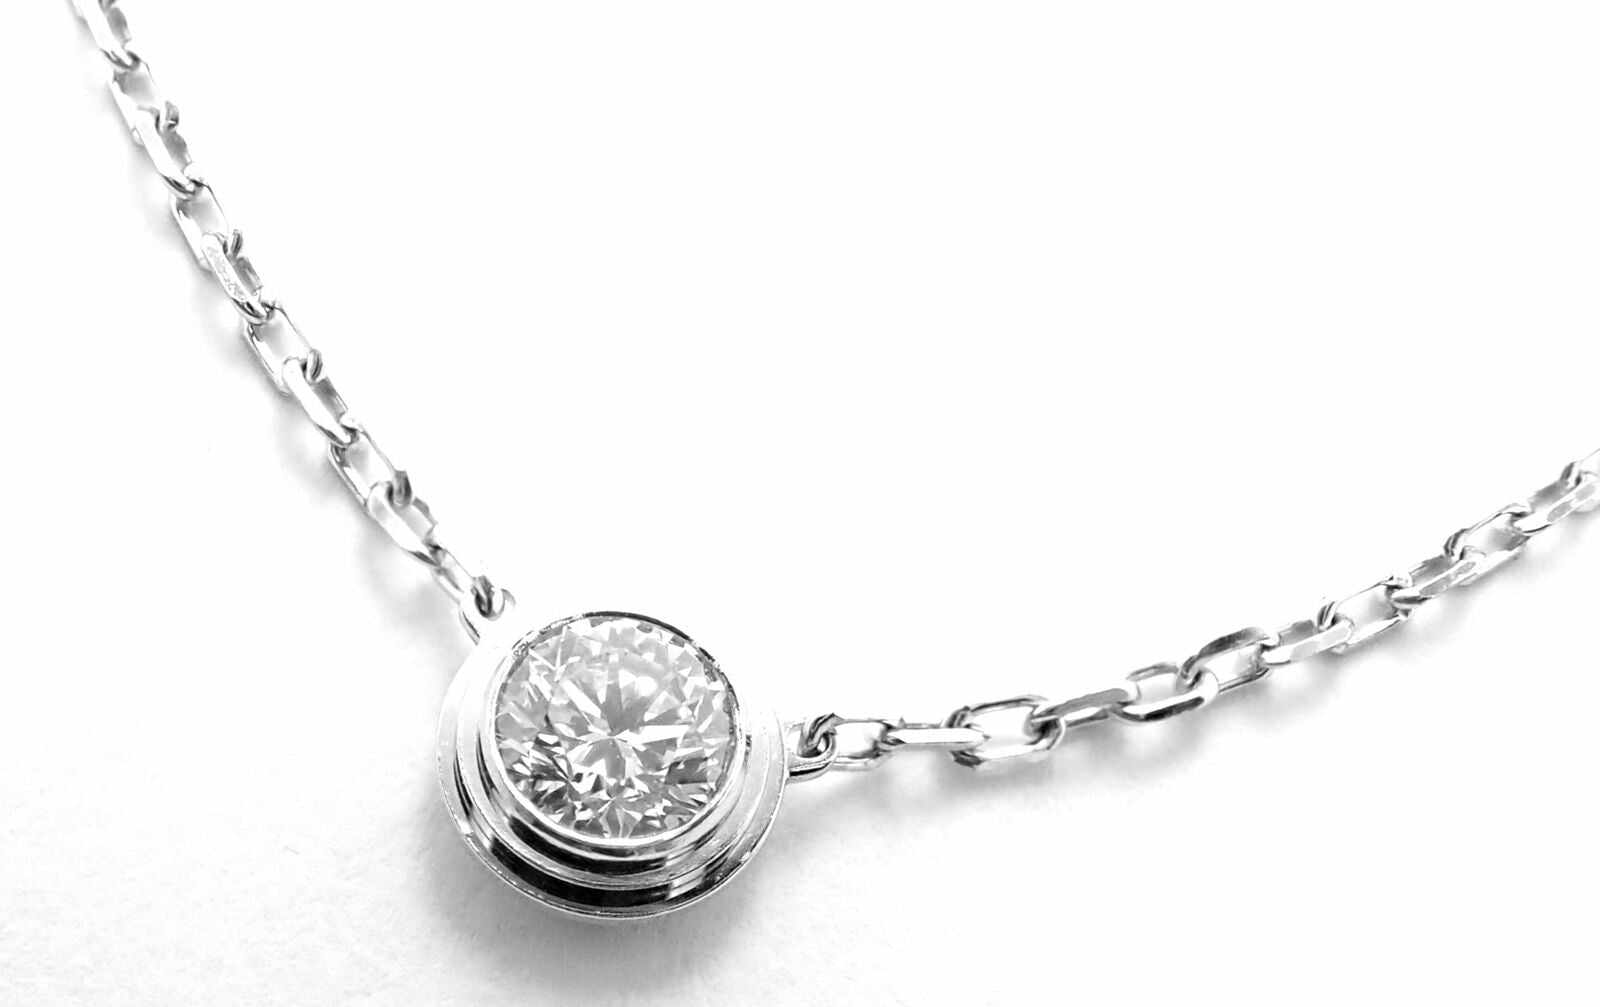 Audrey 14K White Gold Pendant Necklace in White Diamond | Kendra Scott